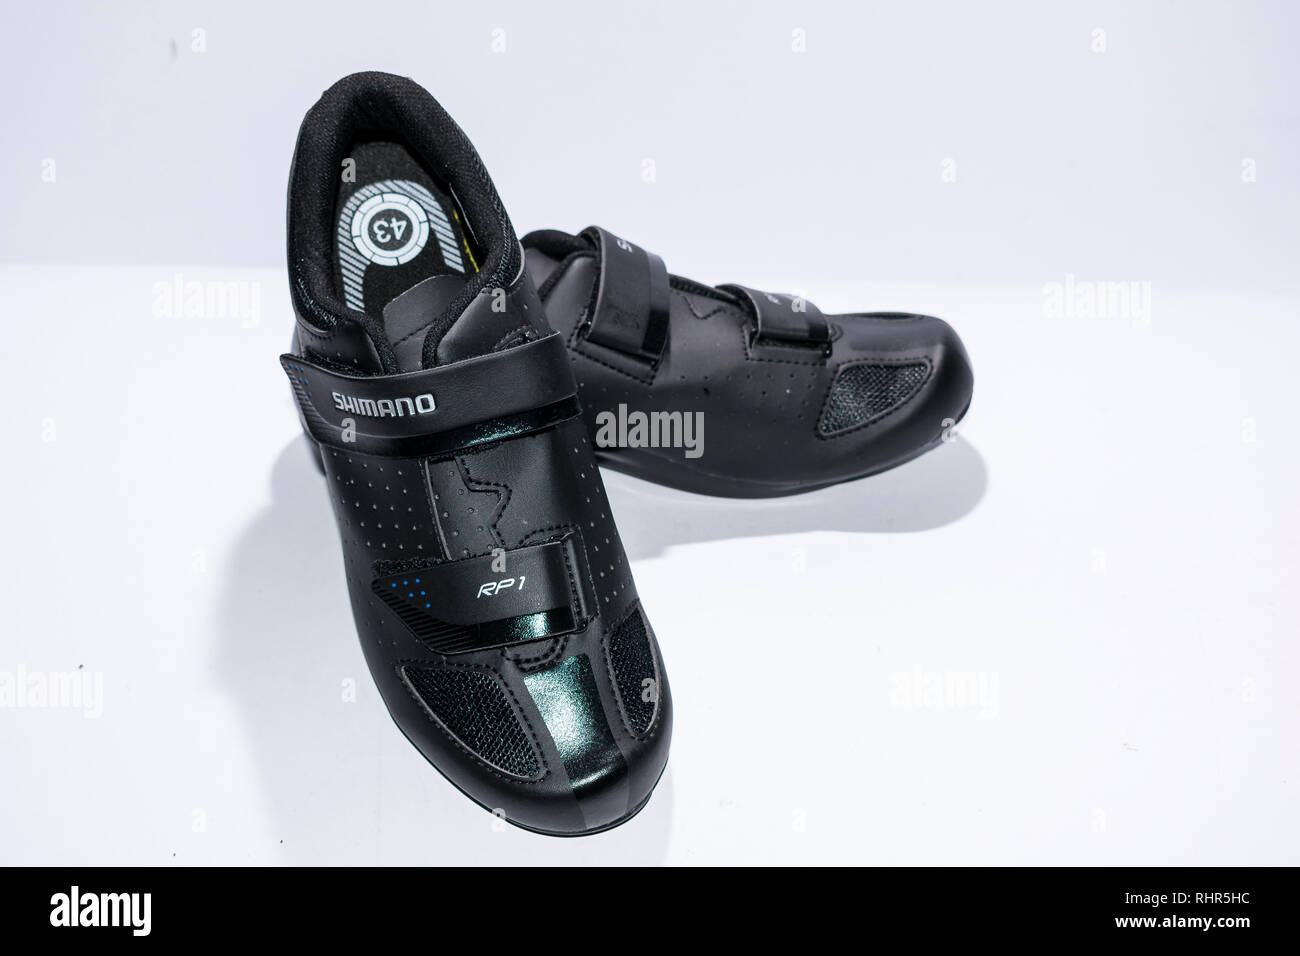 Shimano RP1 Cycling shoes Stock Photo - Alamy